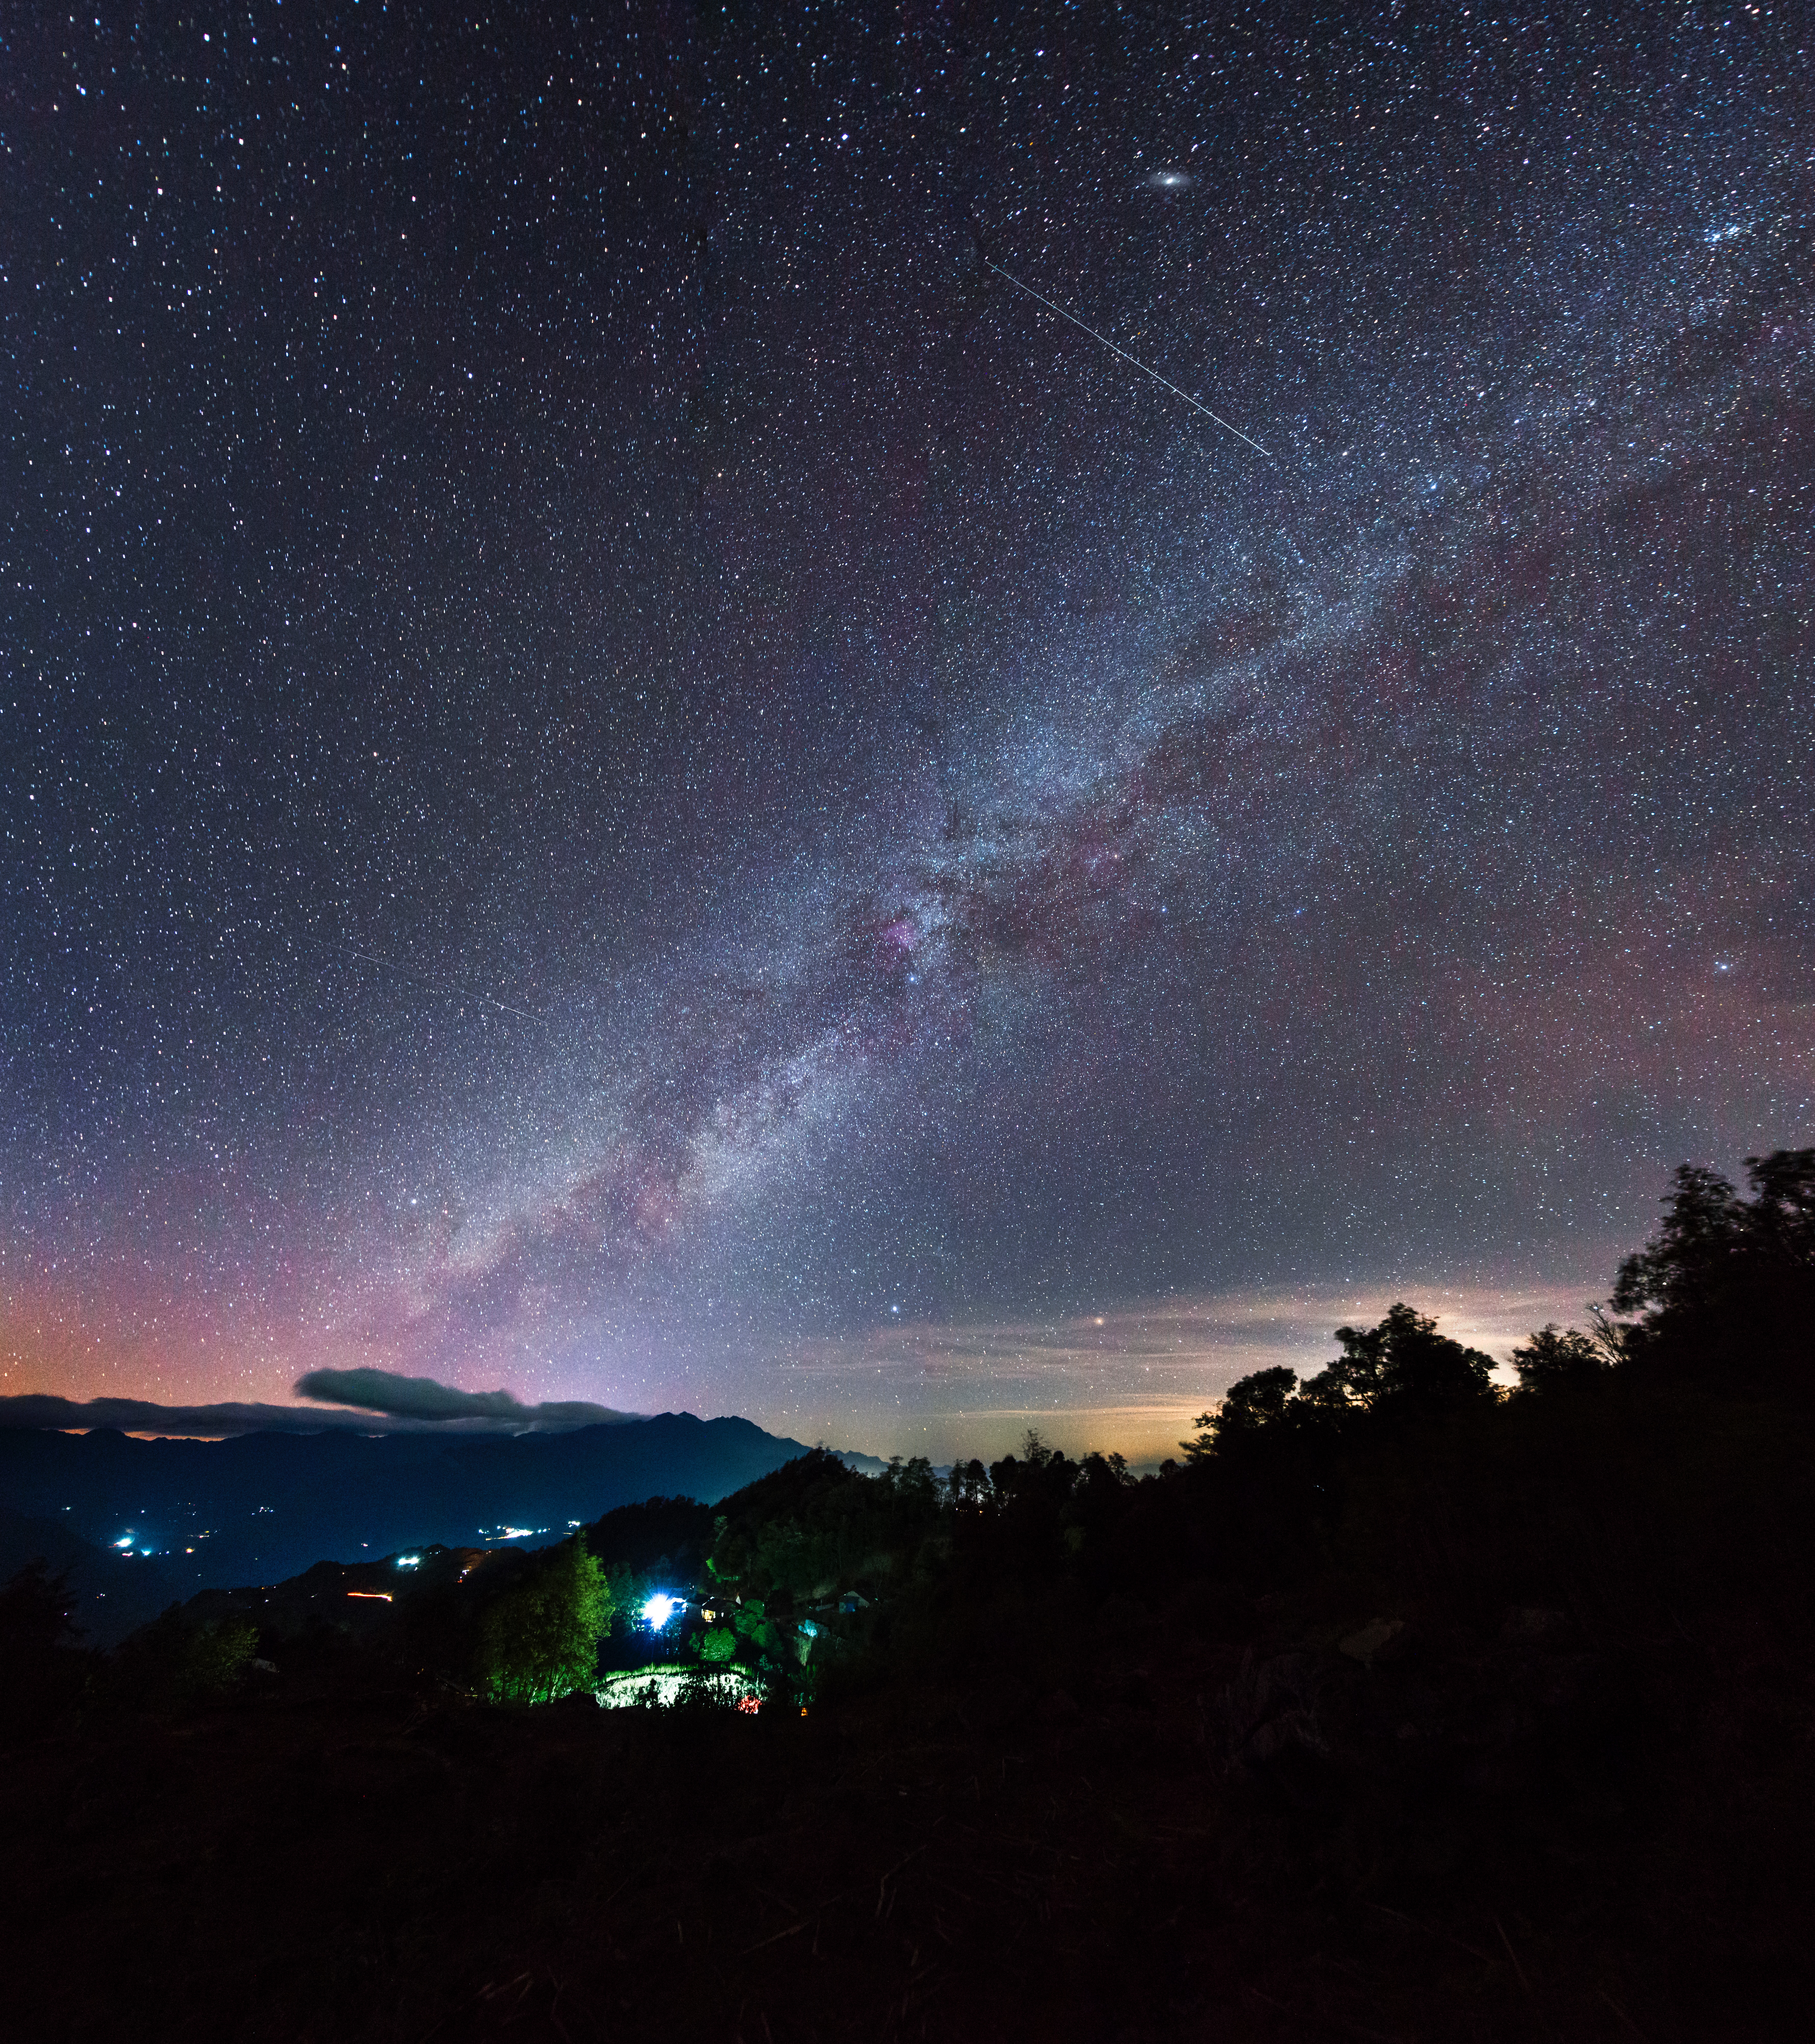 meteor streaking at starry night sky